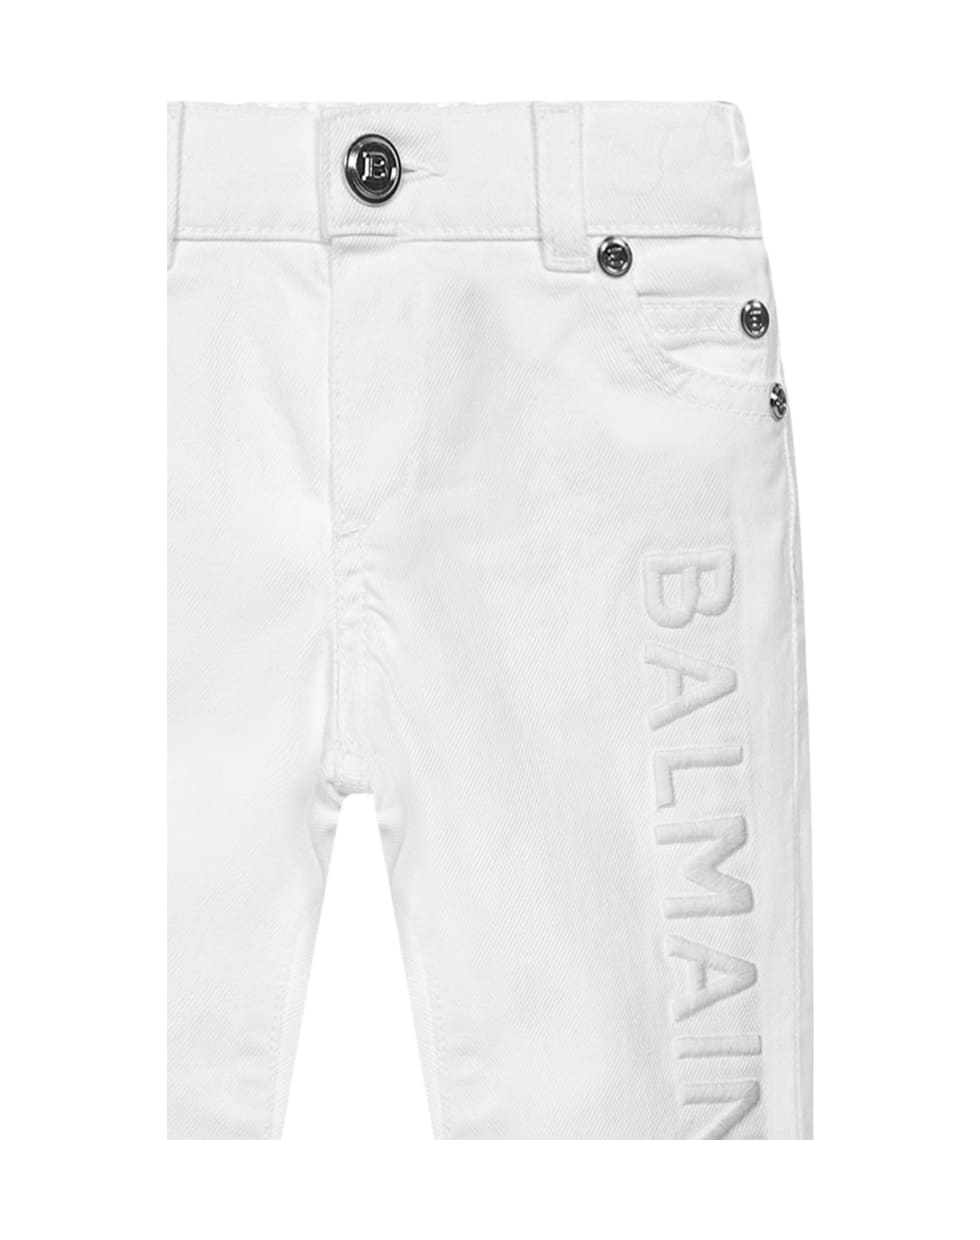 Balmain Jeans - White